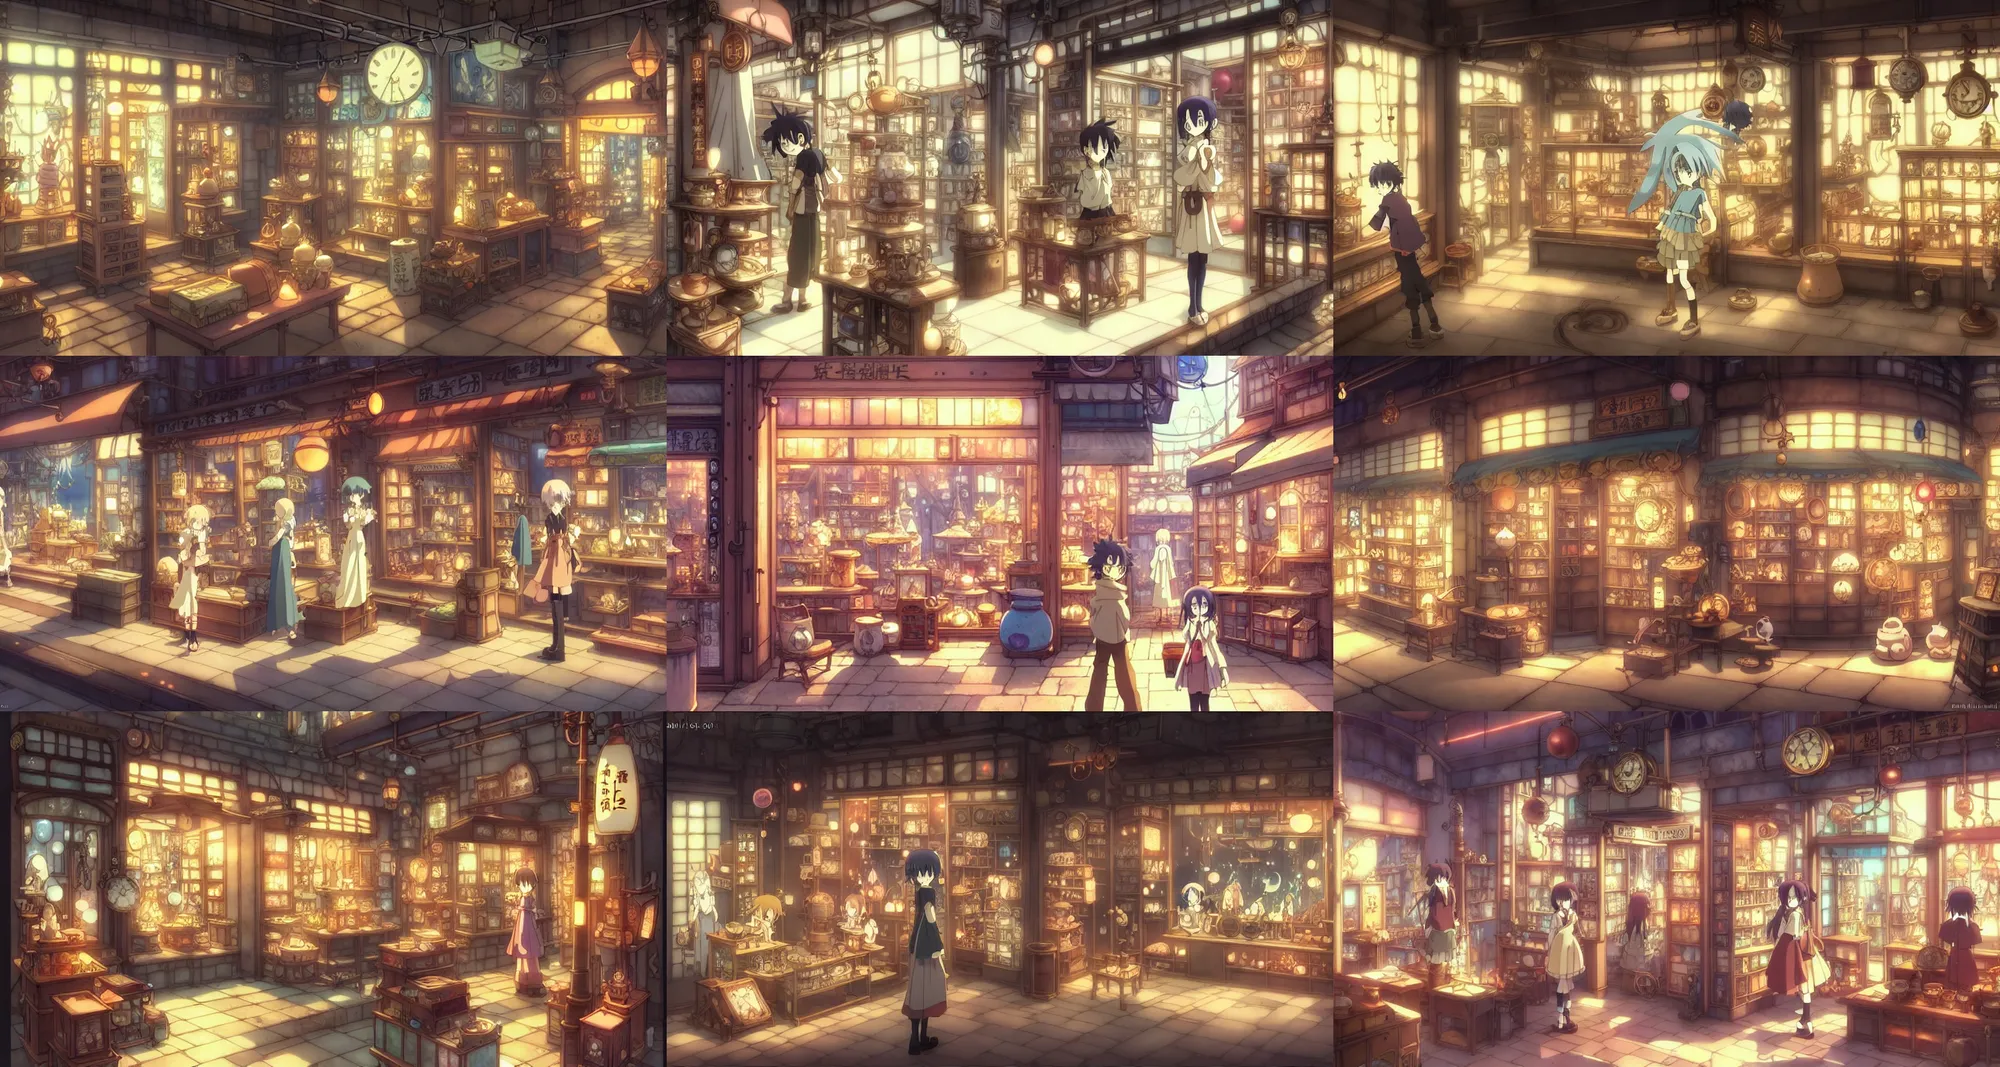 Prompt: beautiful slice of life anime scene of steampunk fantasy storefront for magic items, artifacts, scrolls, wands, happy, relaxing, calm, cozy, peaceful, by mamoru hosoda, hayao miyazaki, makoto shinkai